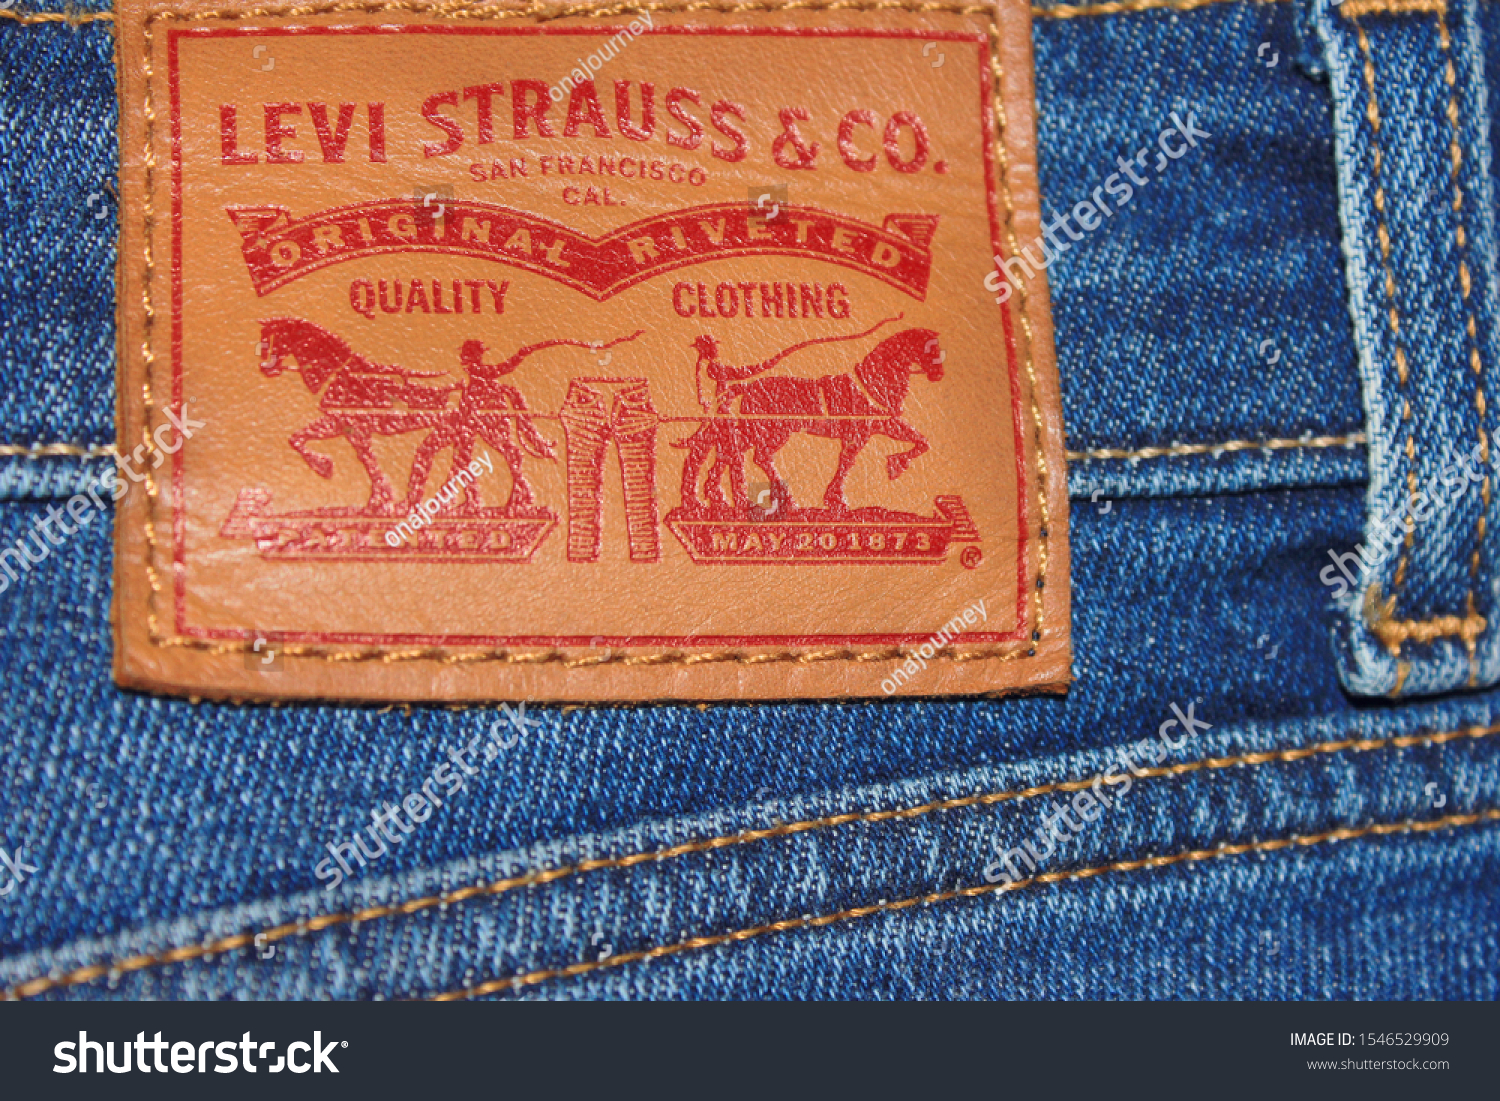 levis jeans brand